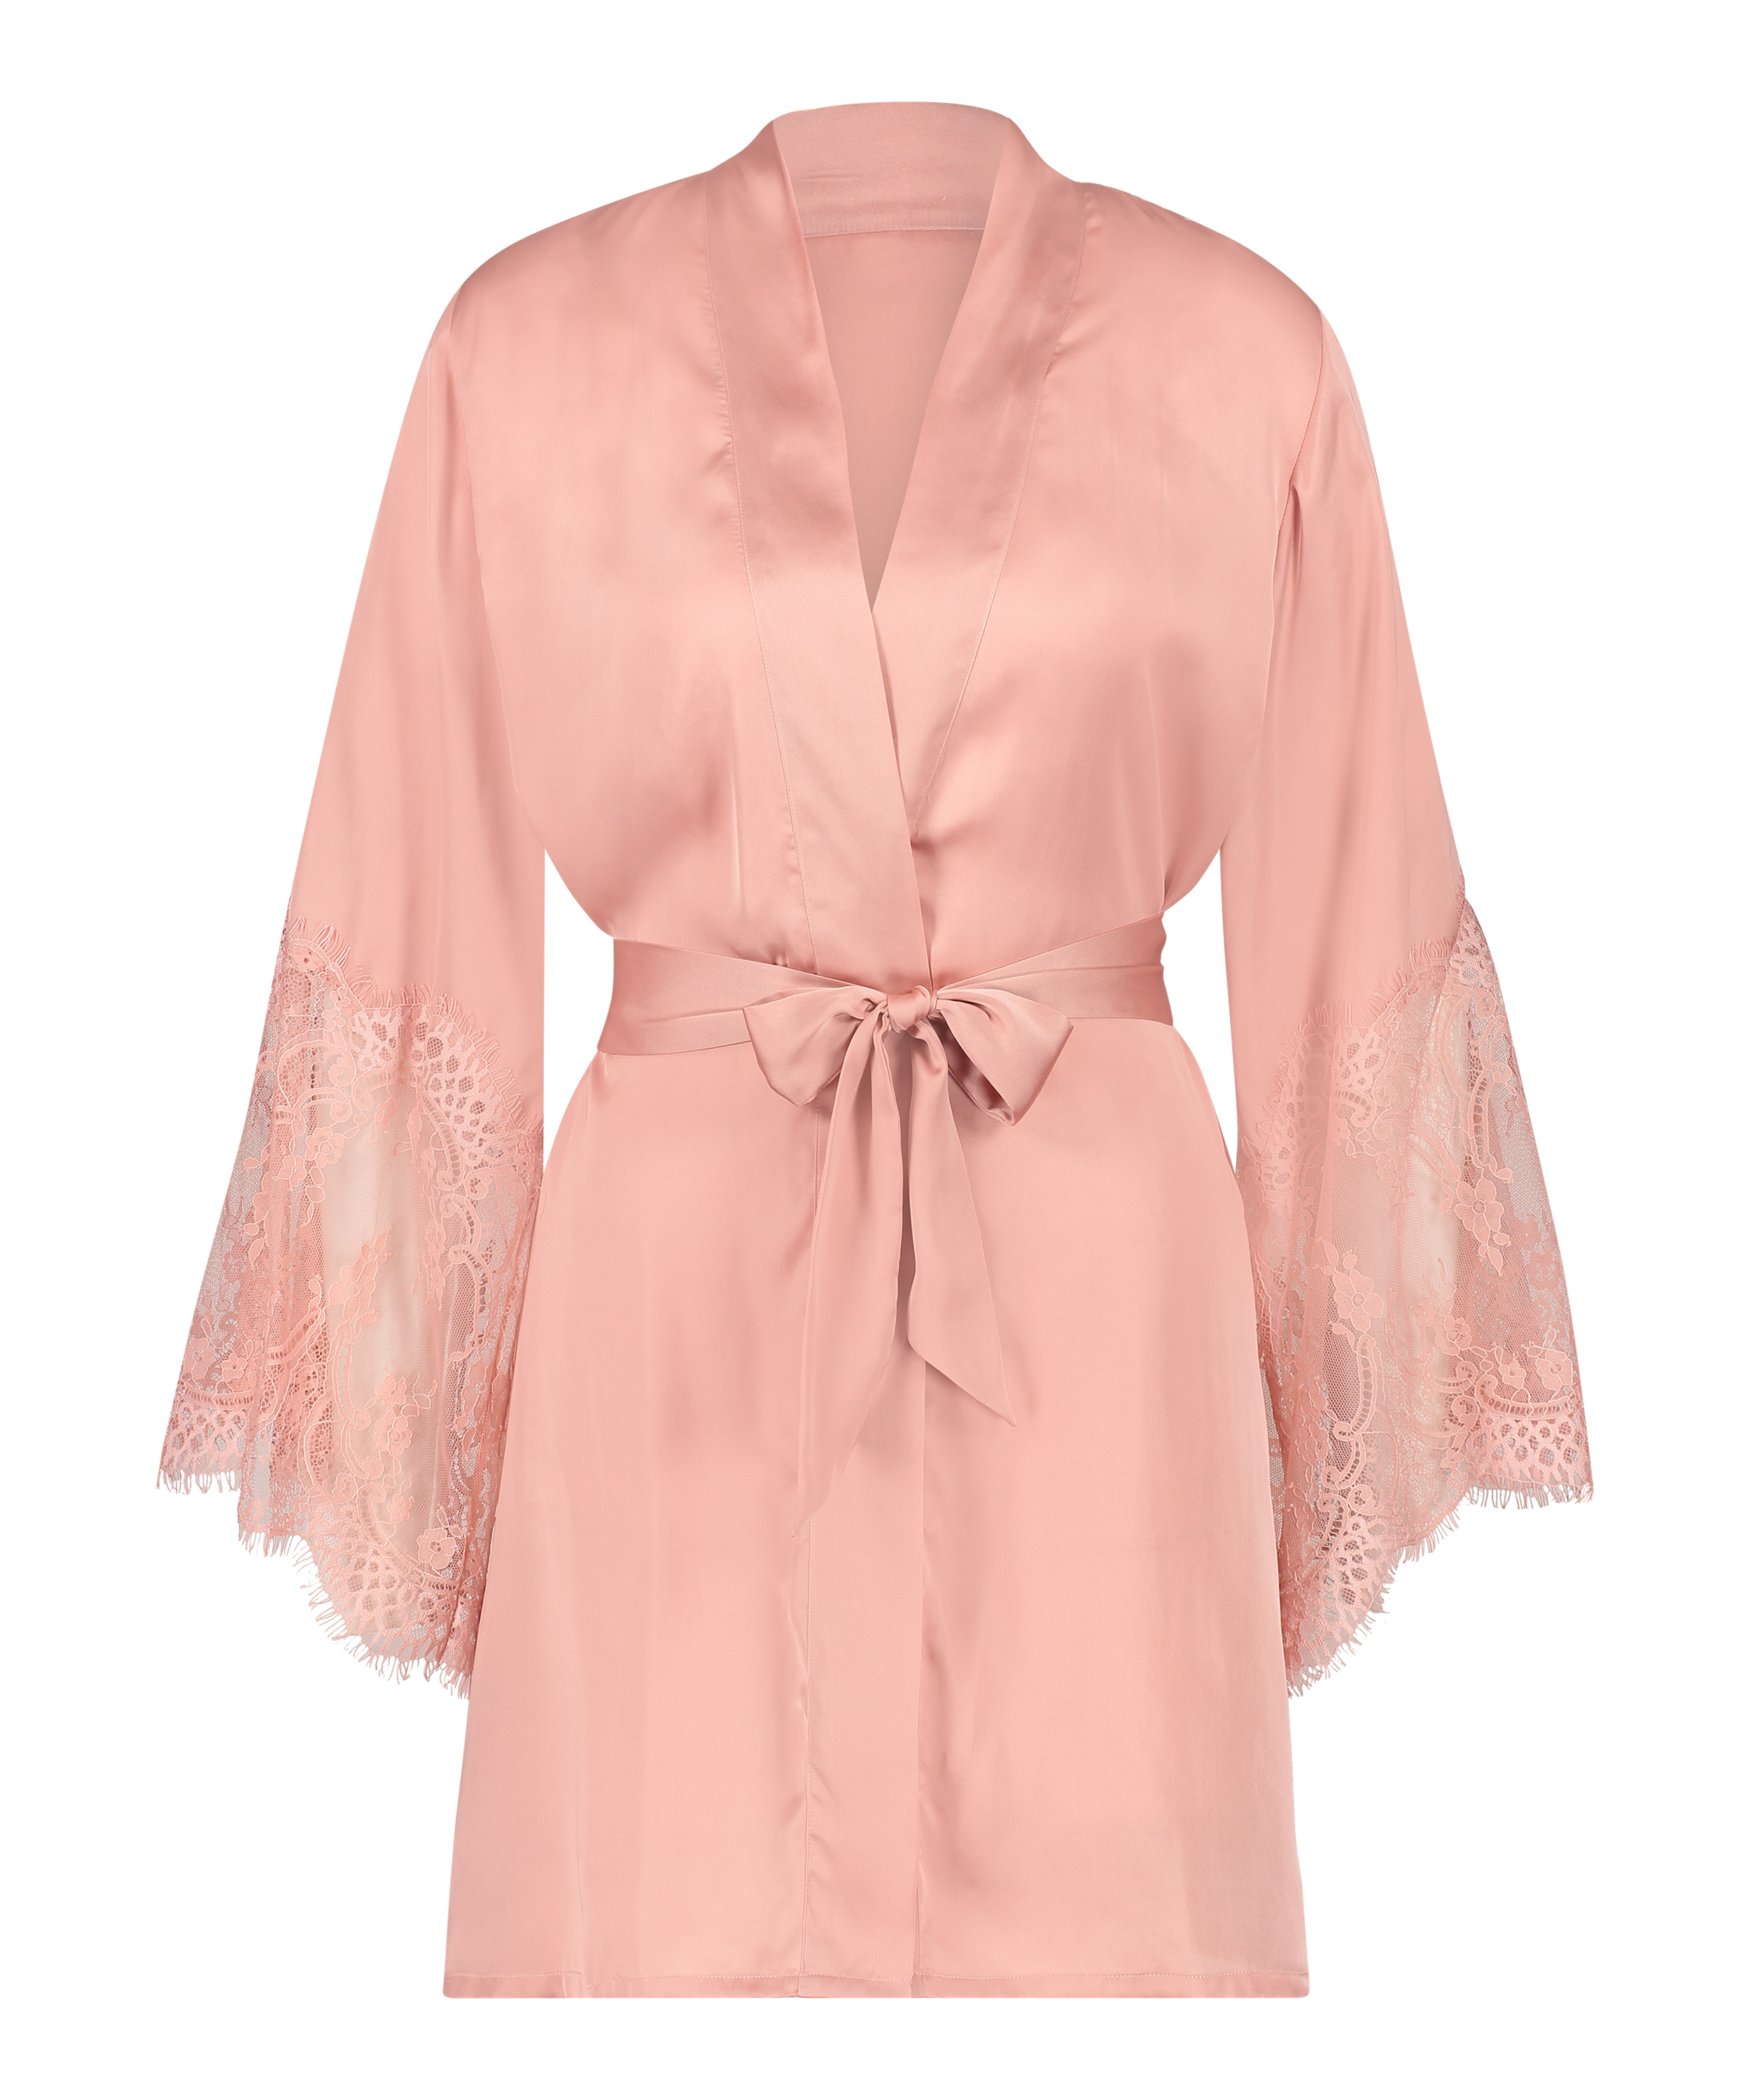 Satin Kimono for €46.99 - All Nightwear - Hunkemöller